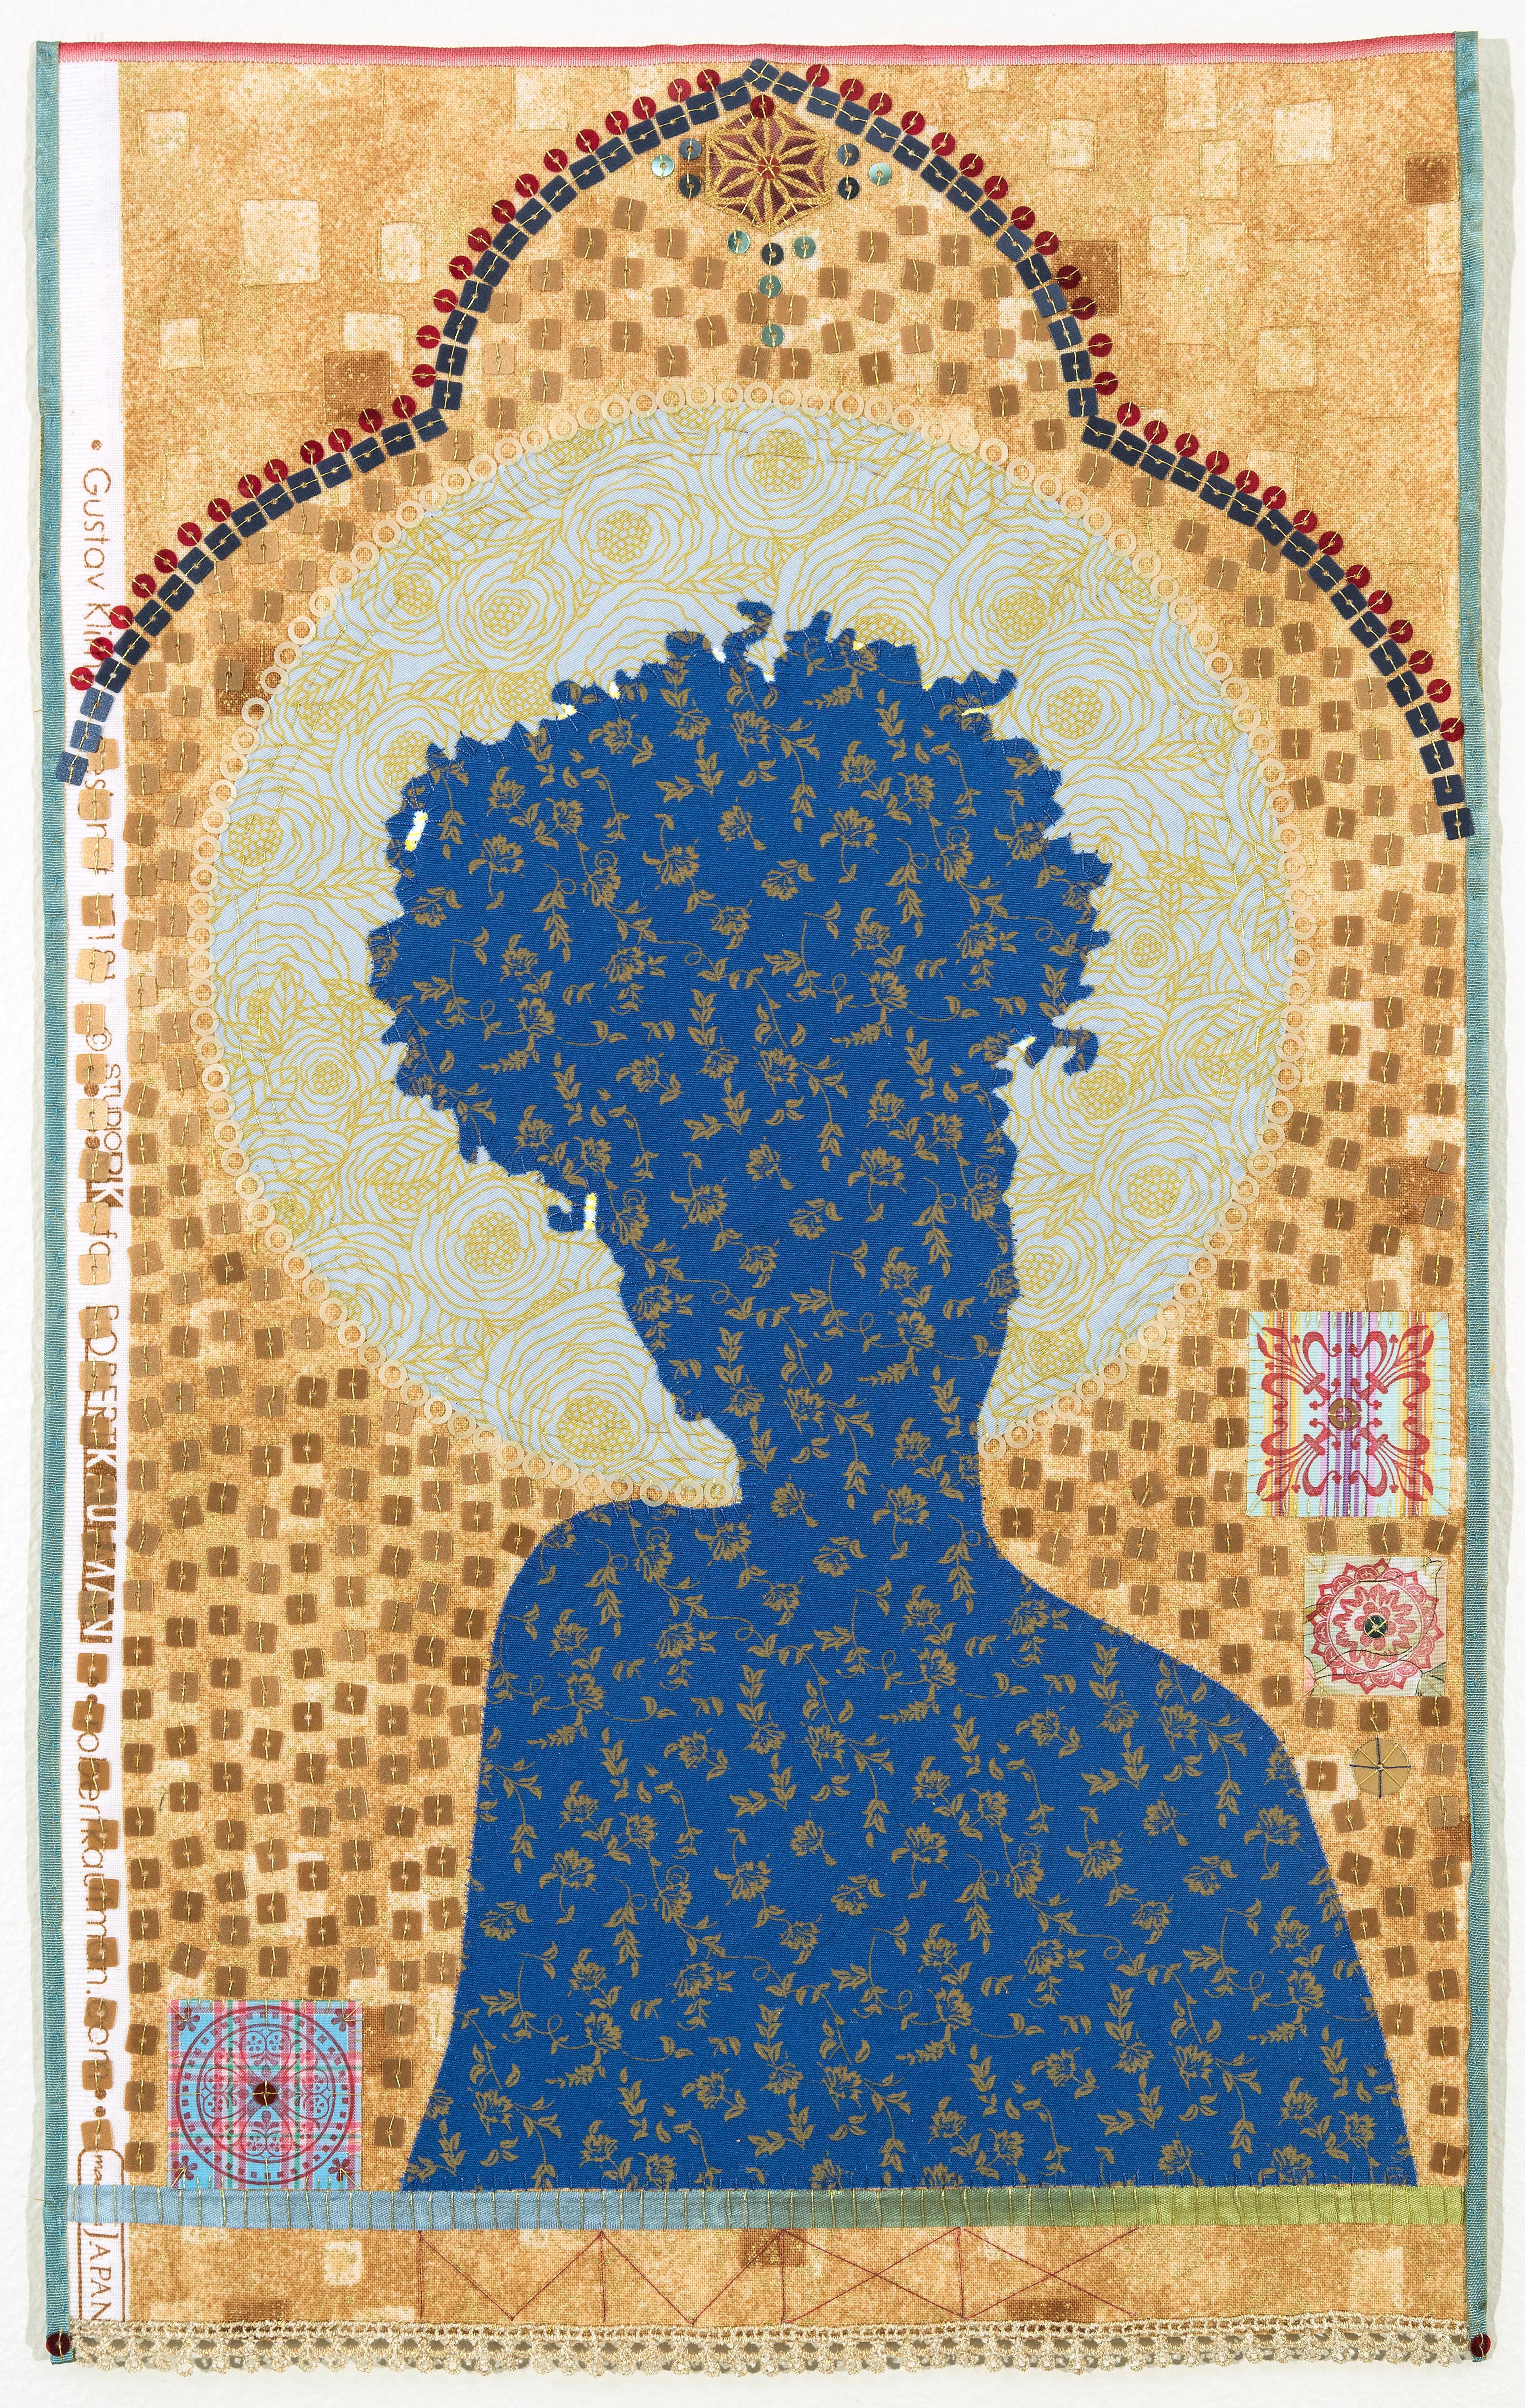 Jan Testori - Markman Figurative Sculpture - Untitled MM9, silhouette, pattern, textile, icon, gold, blue, red